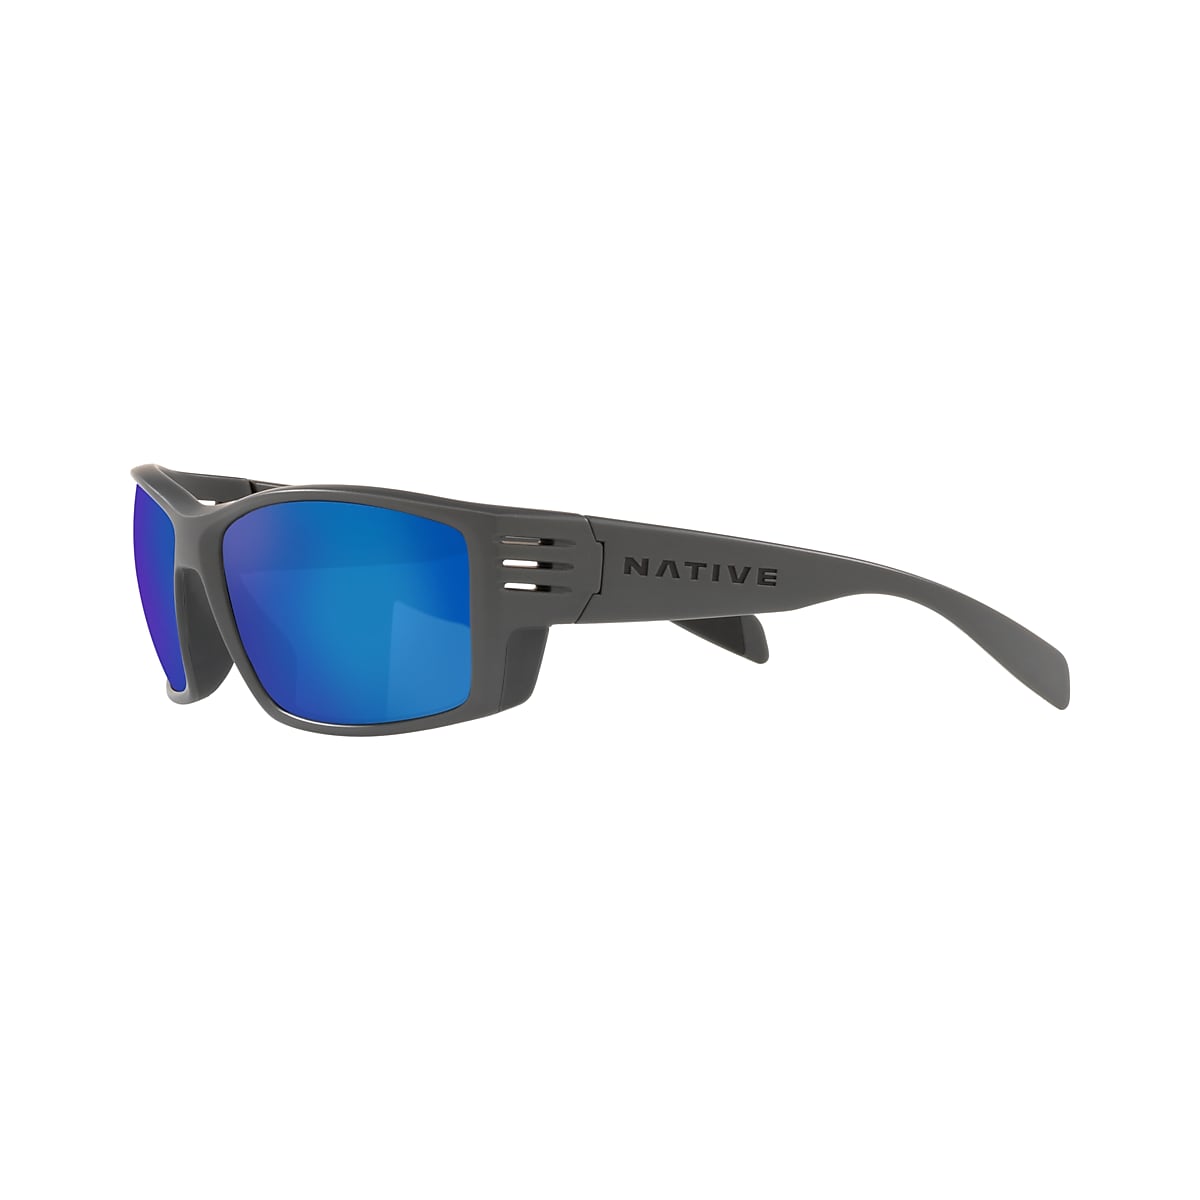 Raghorn Sunglasses Native in Eyewear® Blue Reflex 